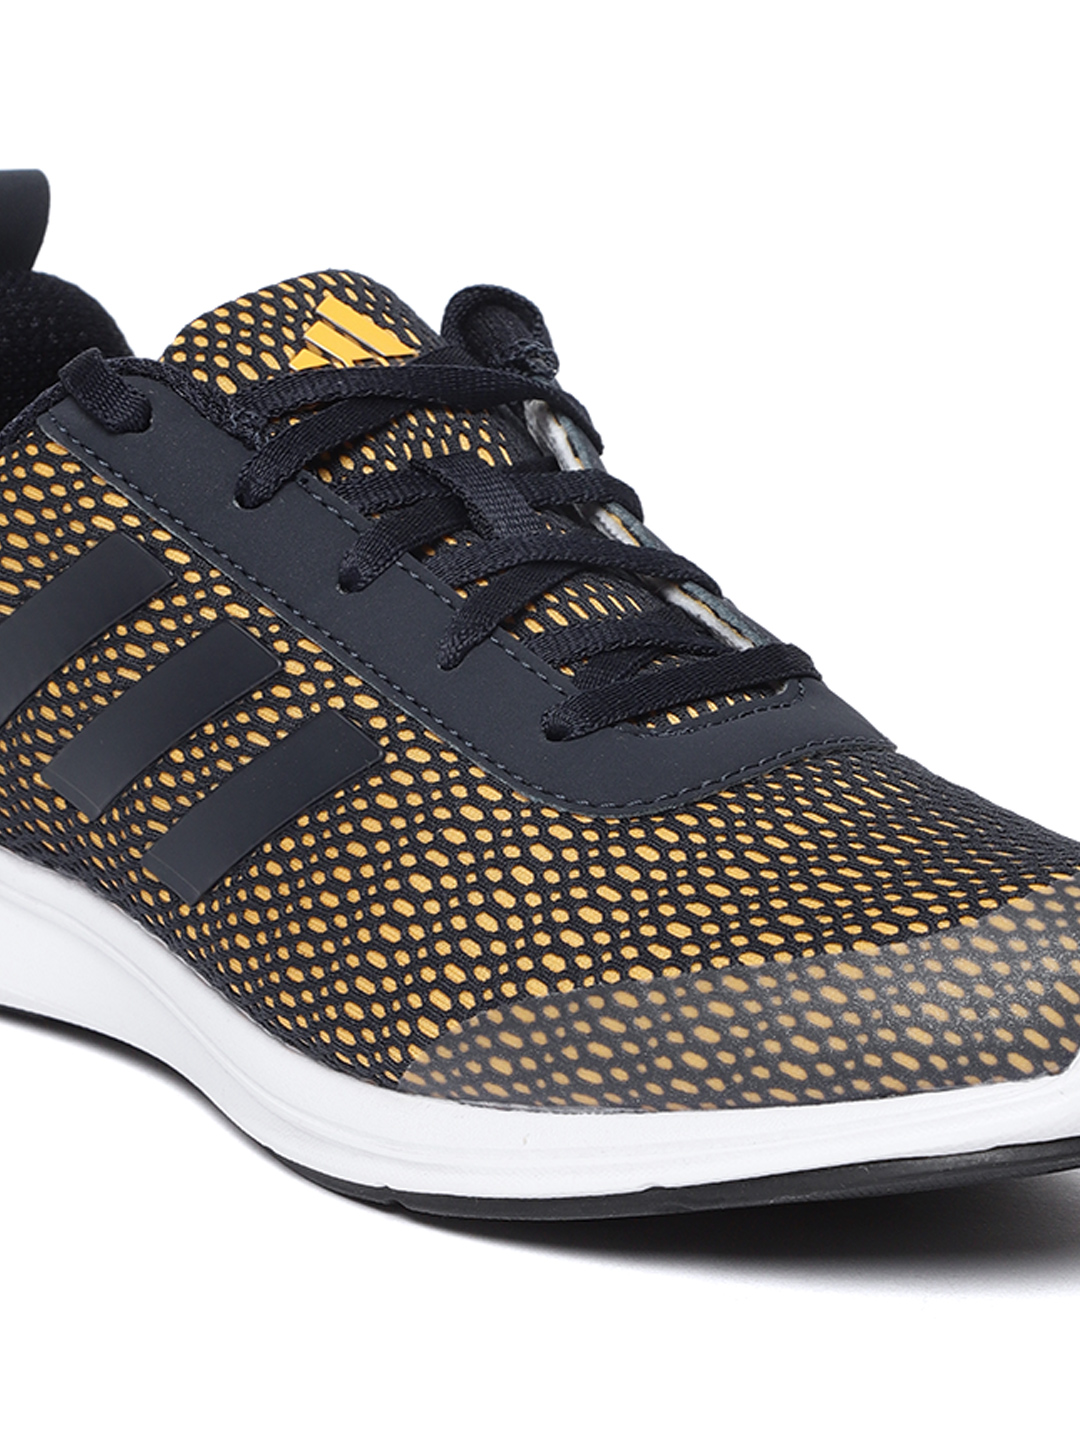 adidas men's adispree 2.0 m running shoes review